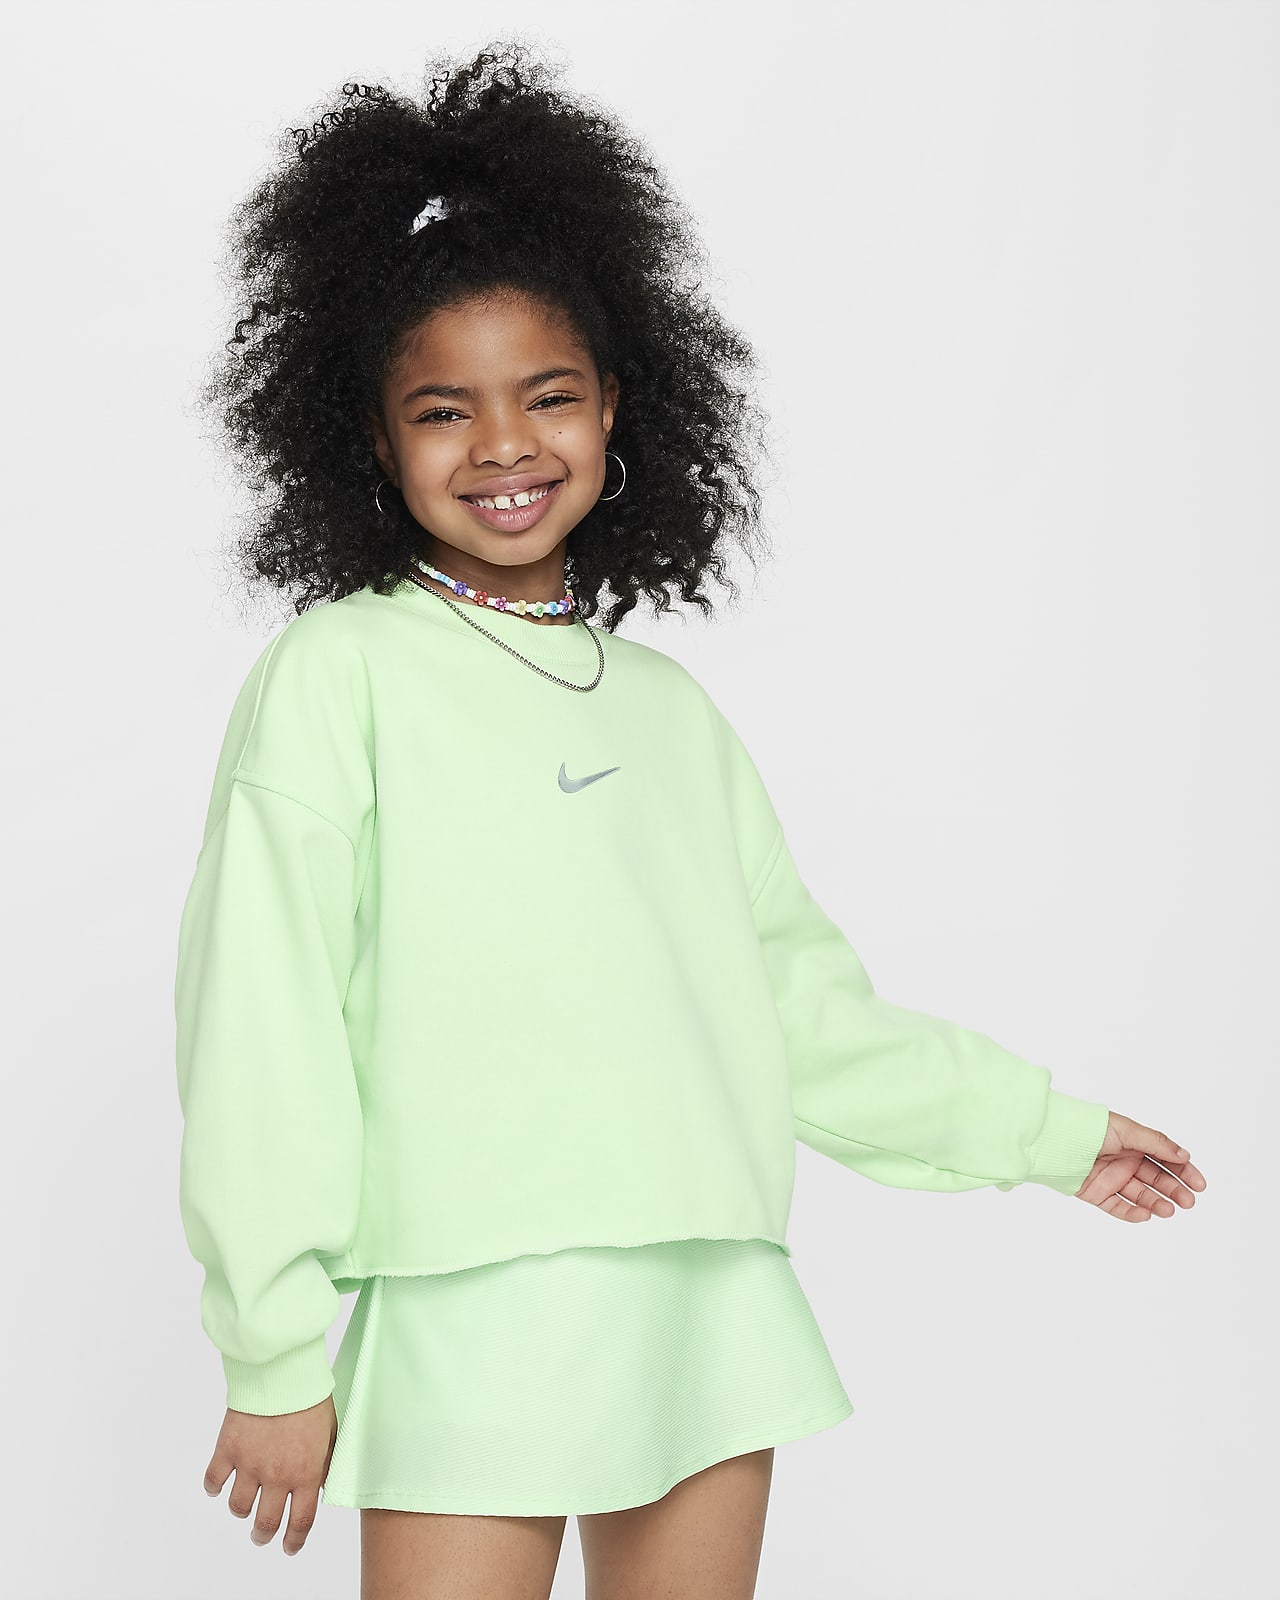 Sweatshirt de gola redonda Dri-FIT Nike Sportswear Júnior (Rapariga)